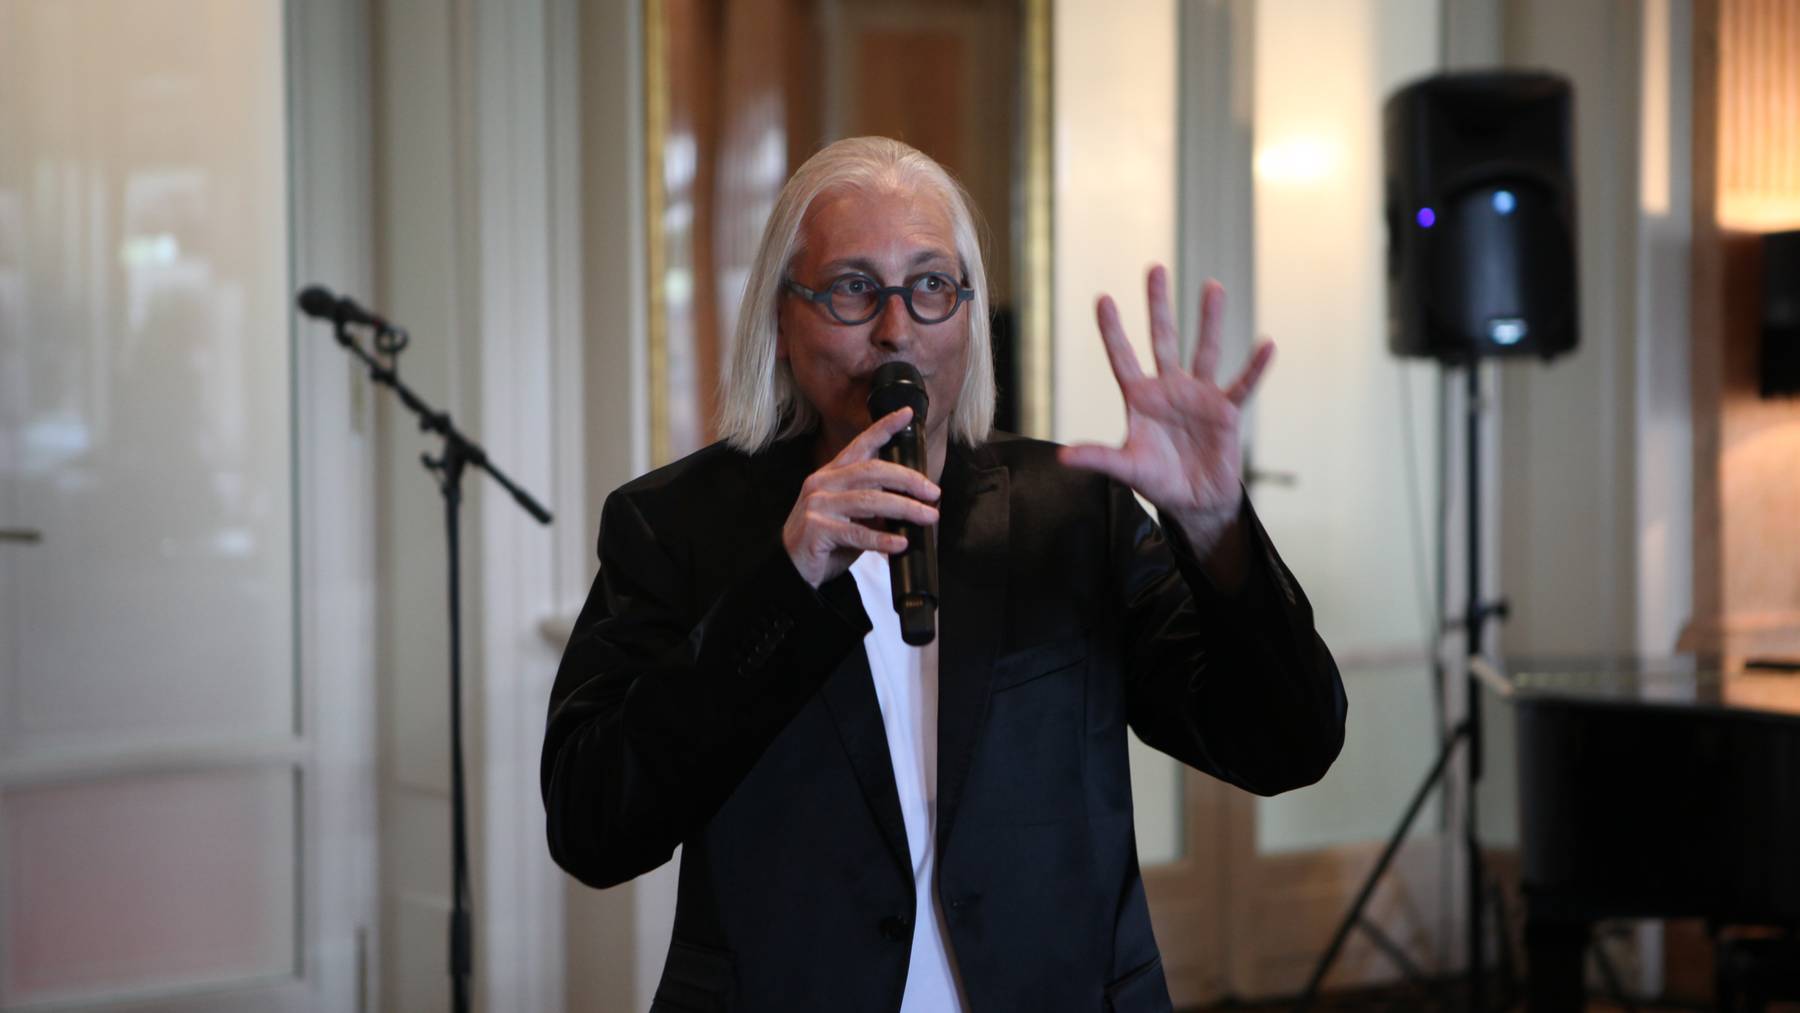 Festival-Direktor Urs Leierer verkündet das Programm vom Blue Balls Festival 2015.